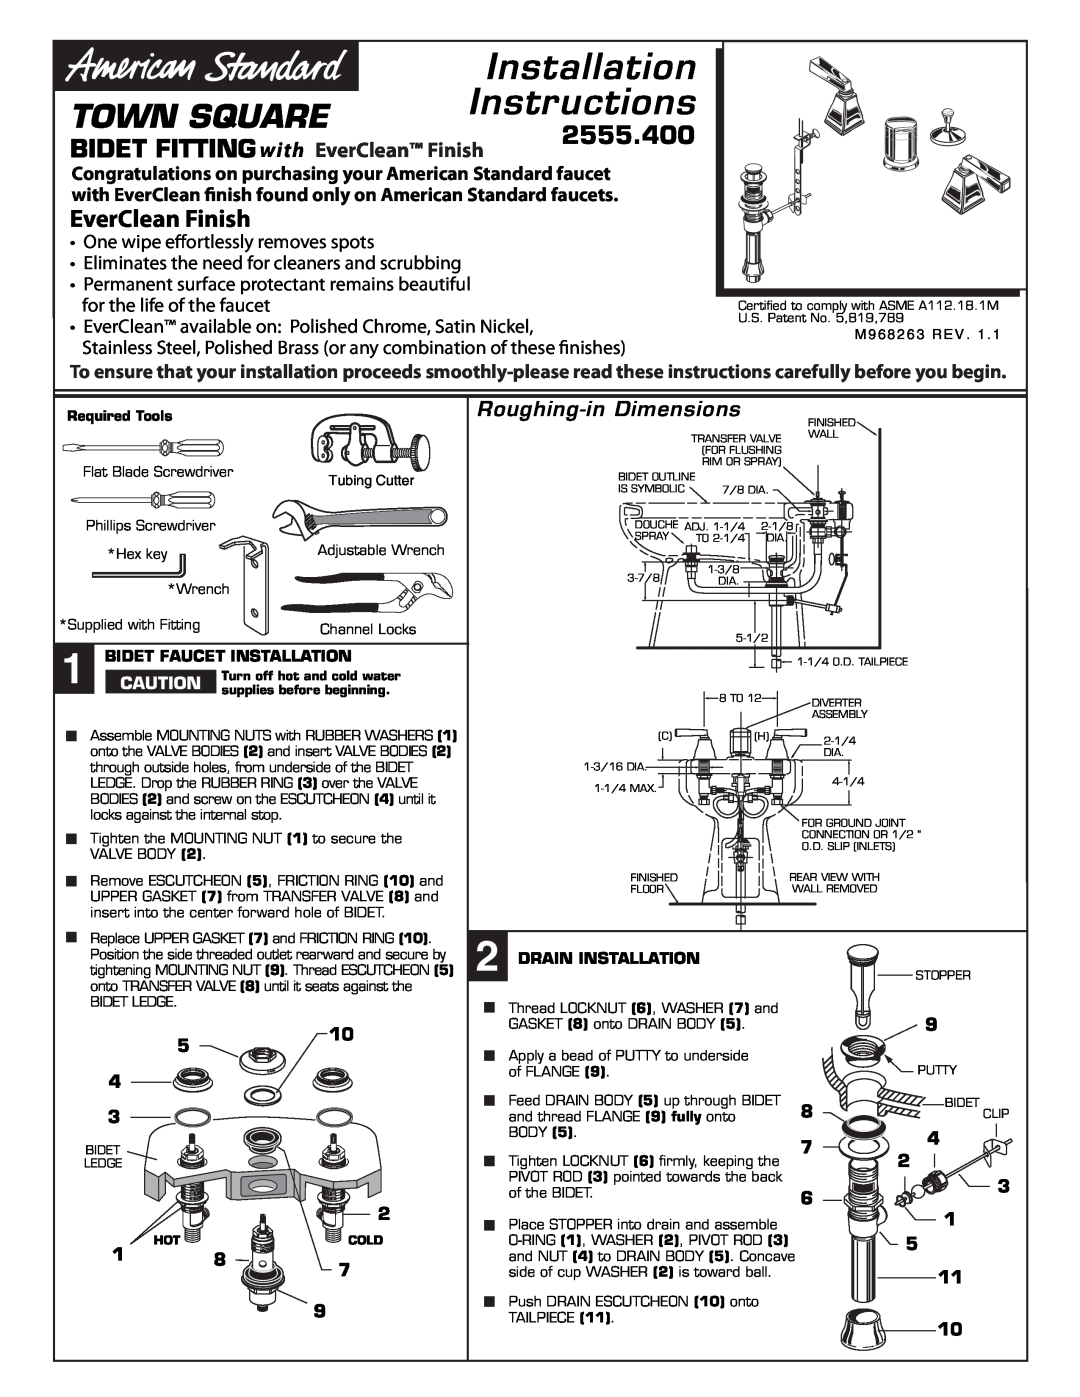 American Standard 2555.400 installation instructions Installation, Instructions, Town Square, EverClean Finish 